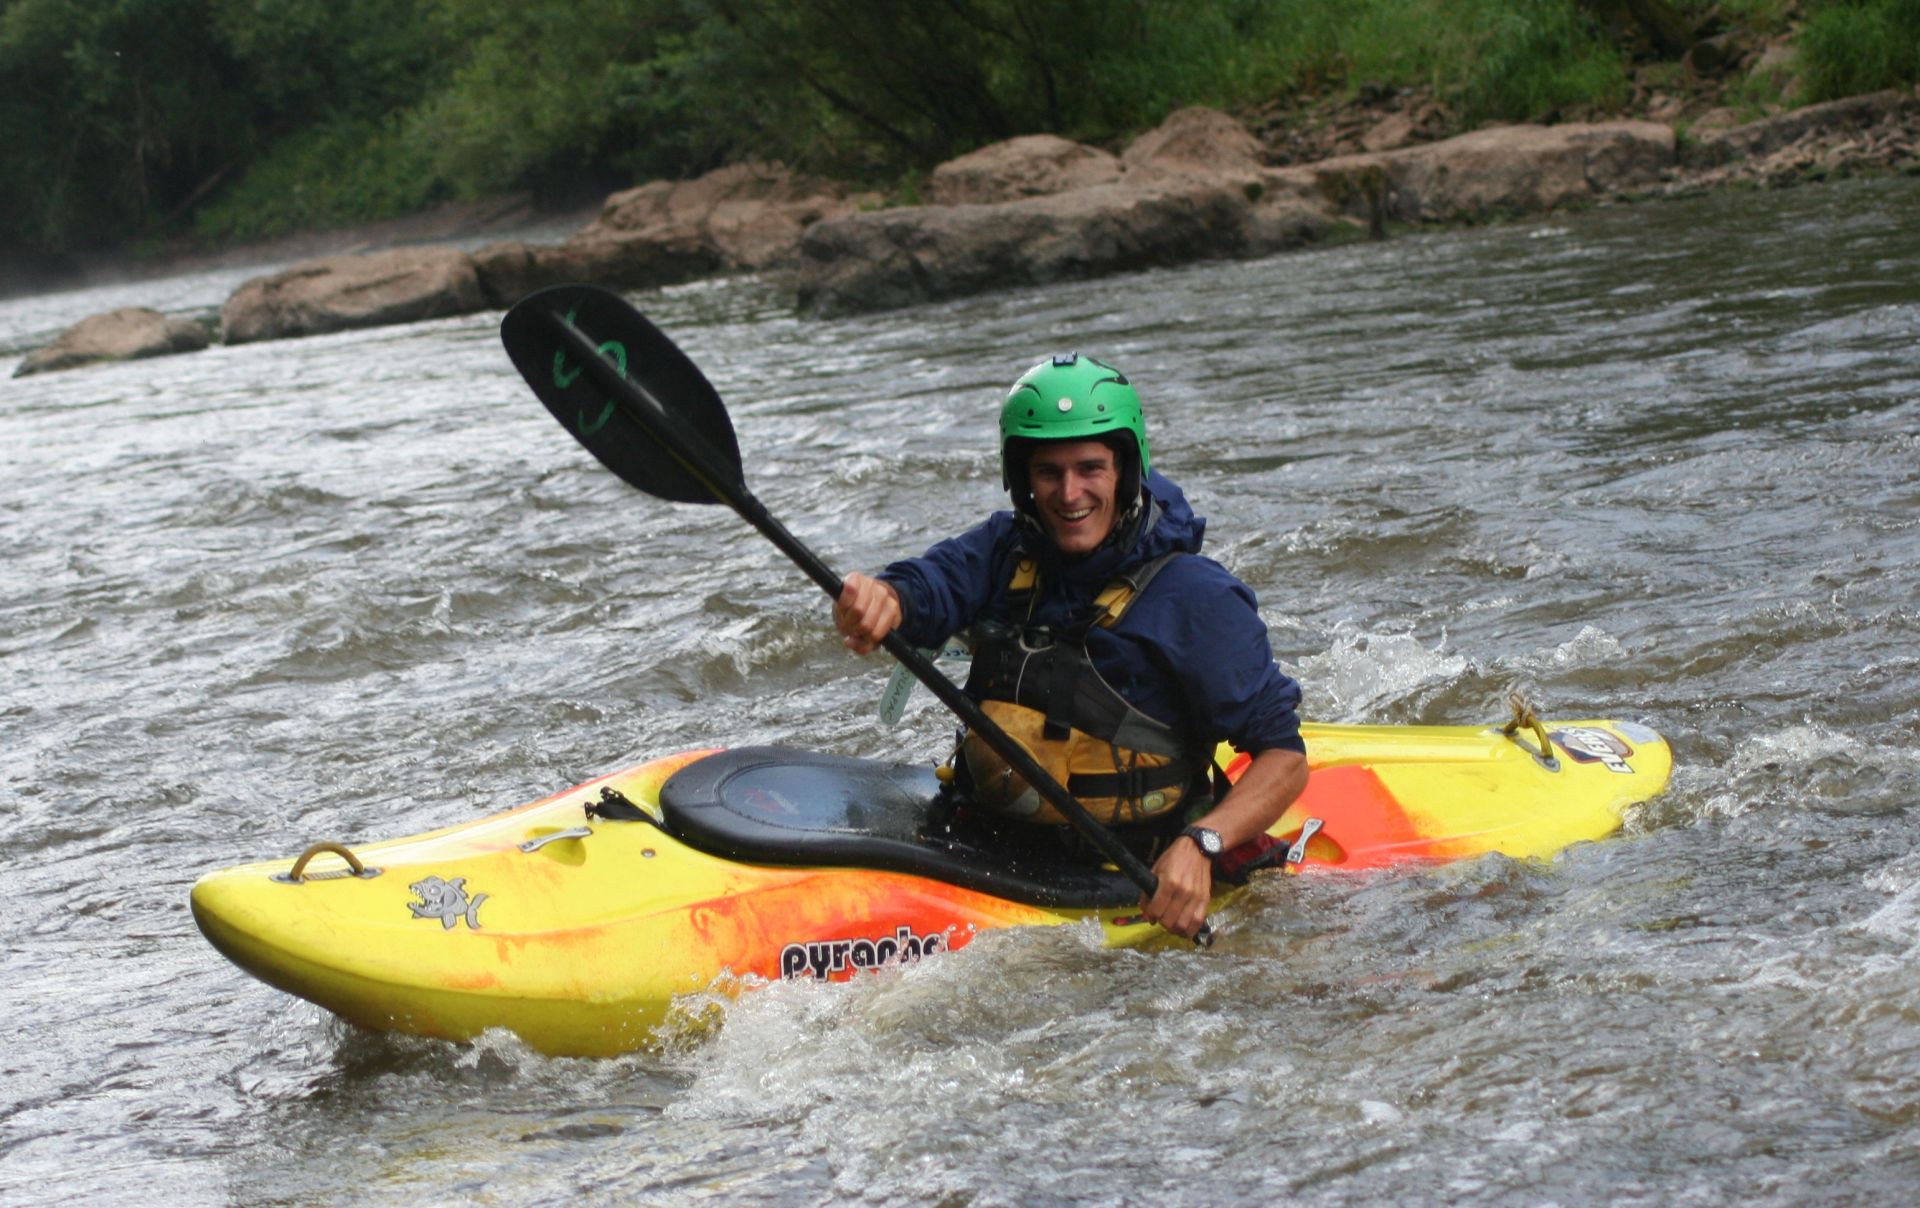 Kayaker on Symonds Yat Rapids